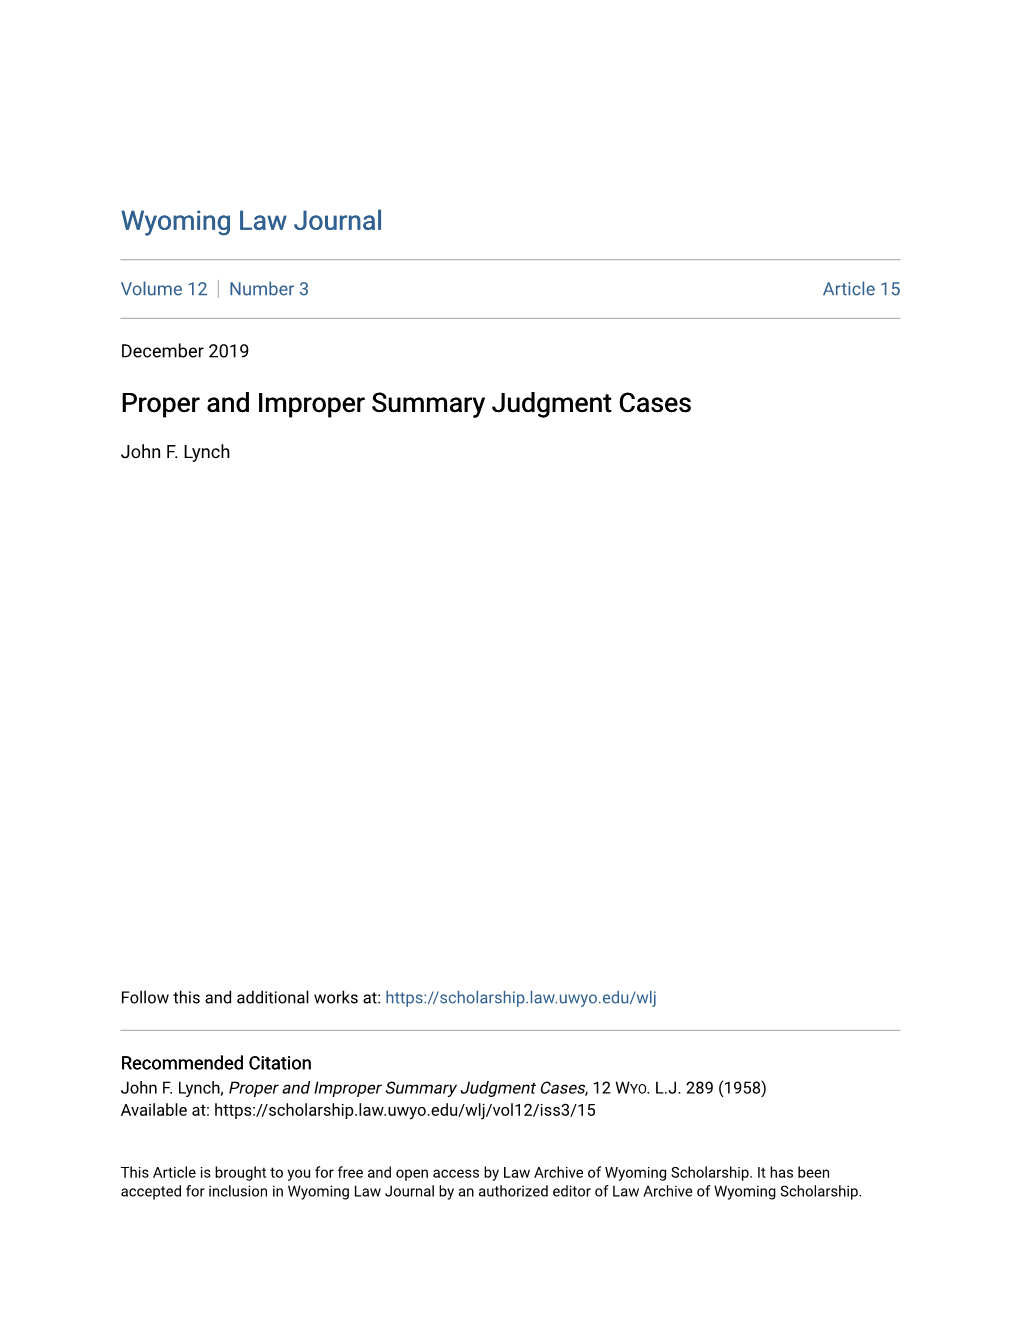 Proper and Improper Summary Judgment Cases